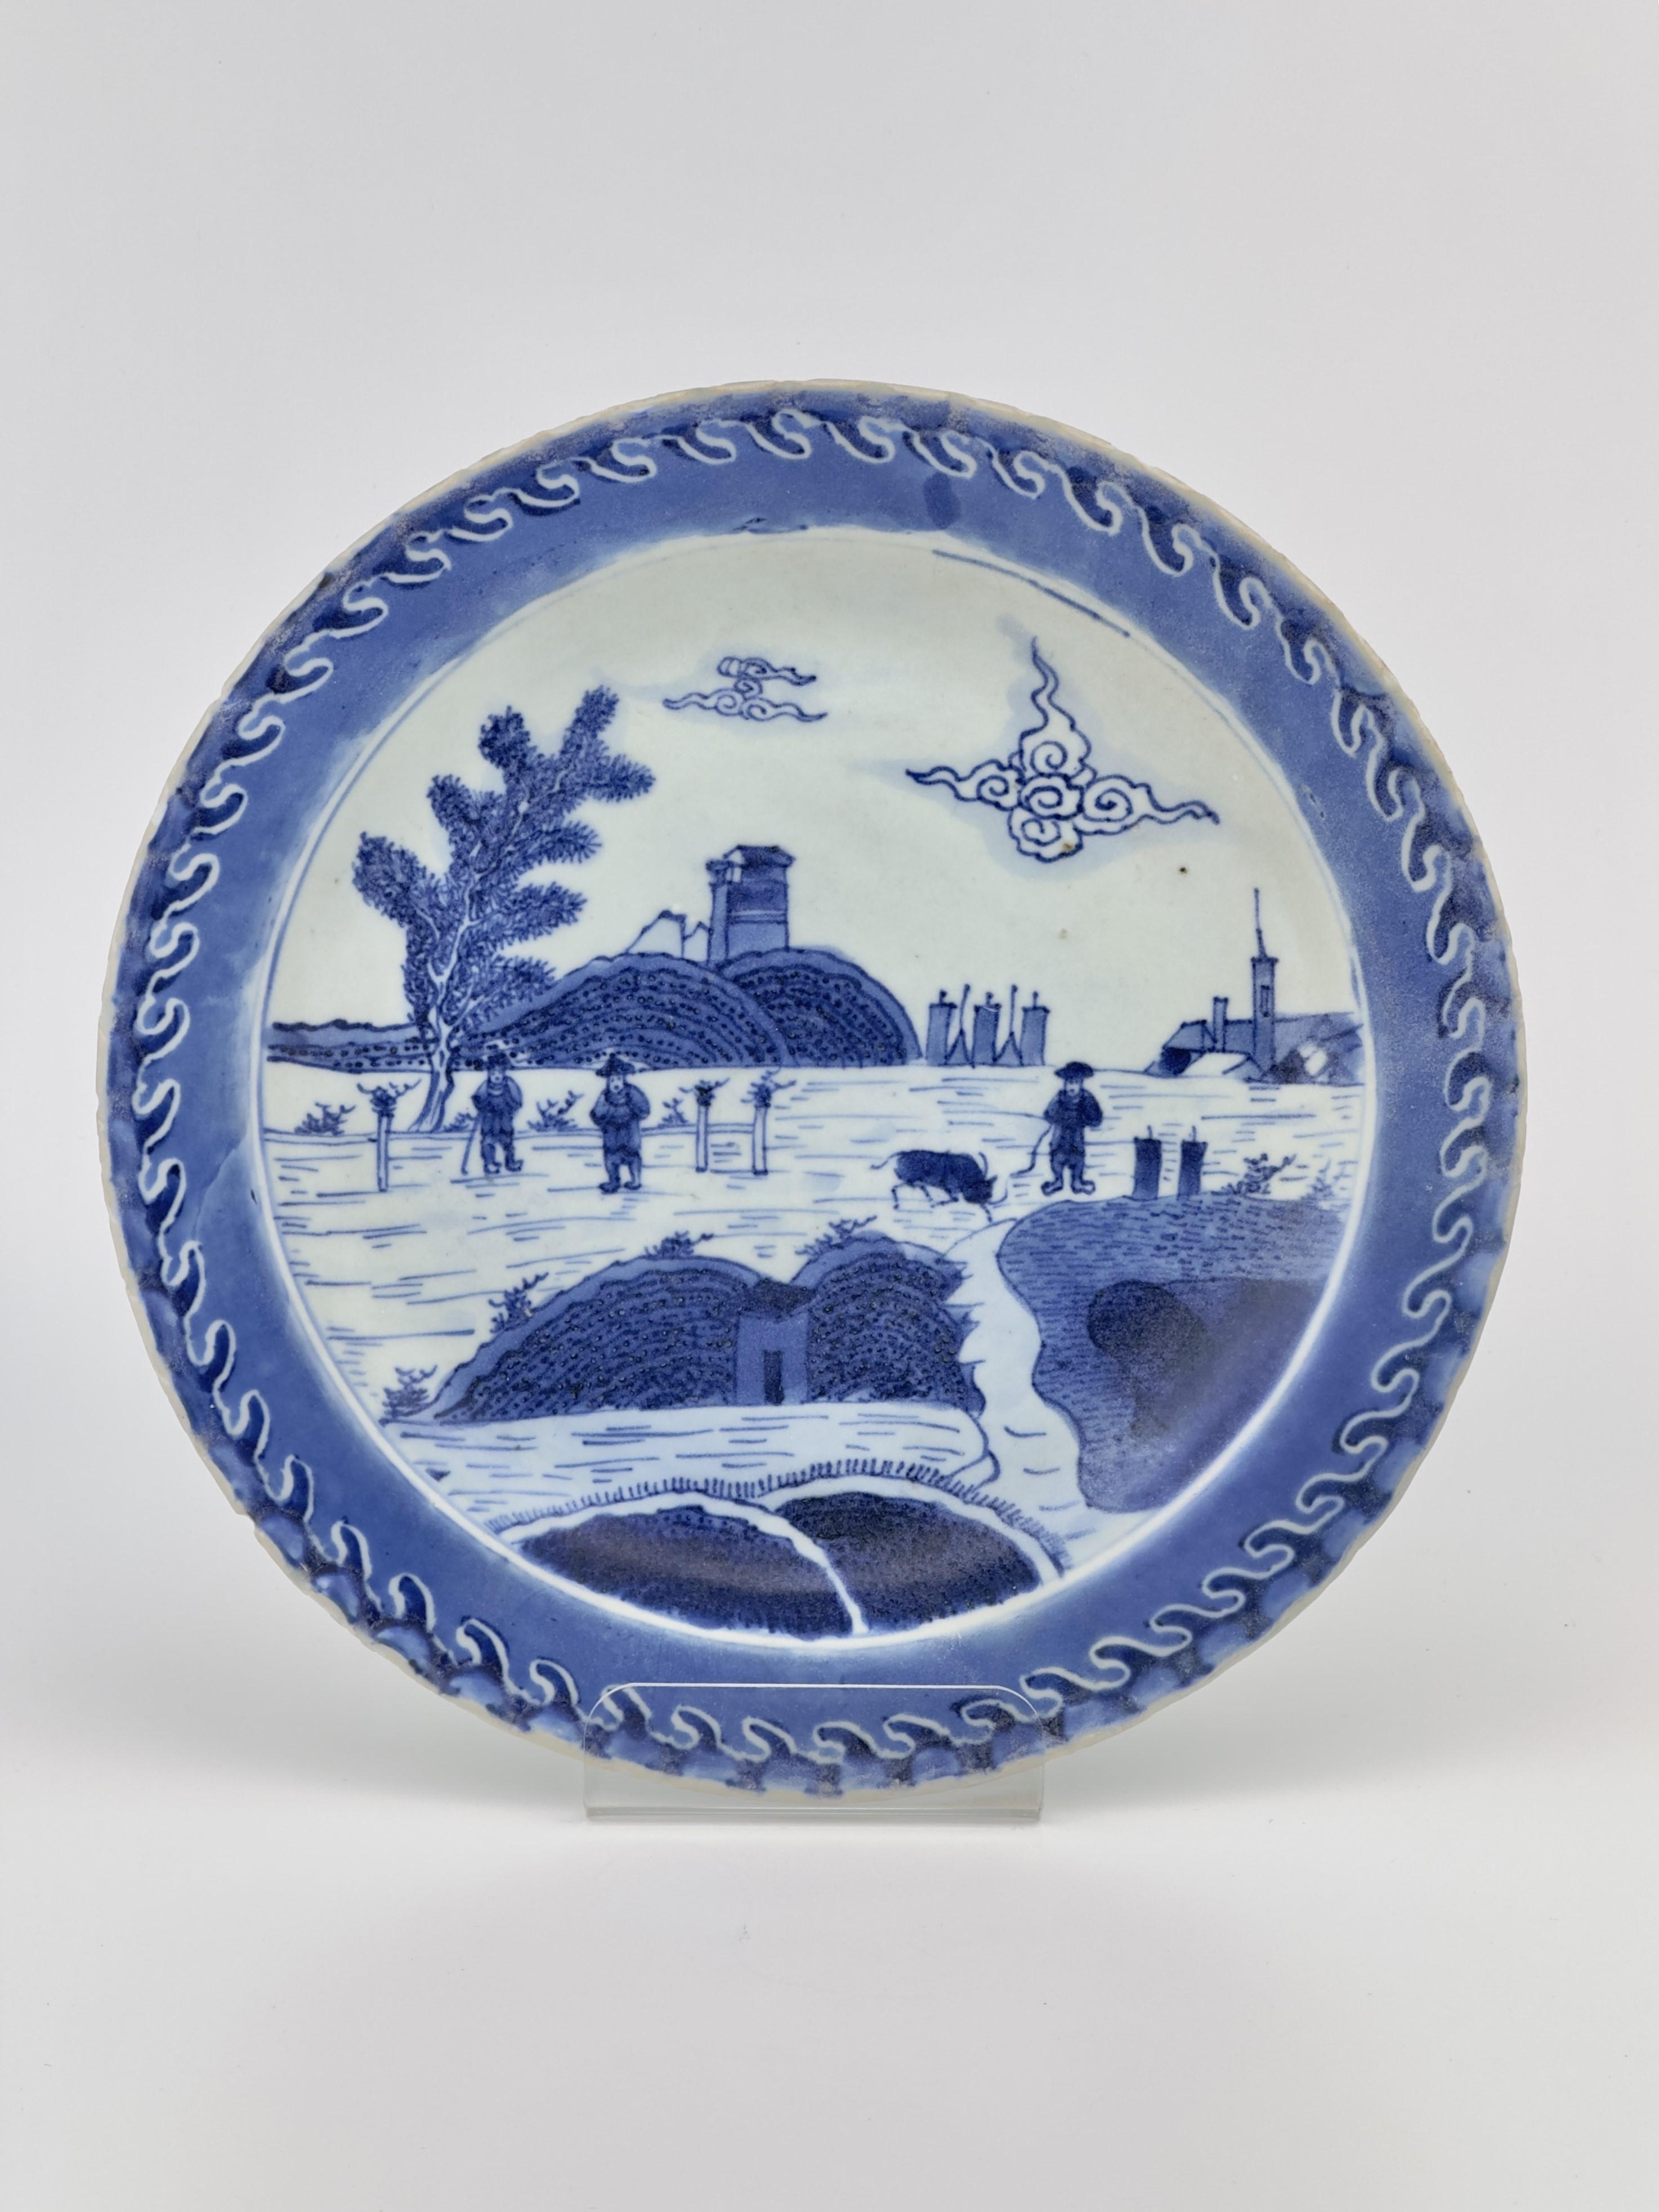  'Deshima Island' Pattern Blue and White dish c1725, Qing Dynasty, Yongzheng Era For Sale 6